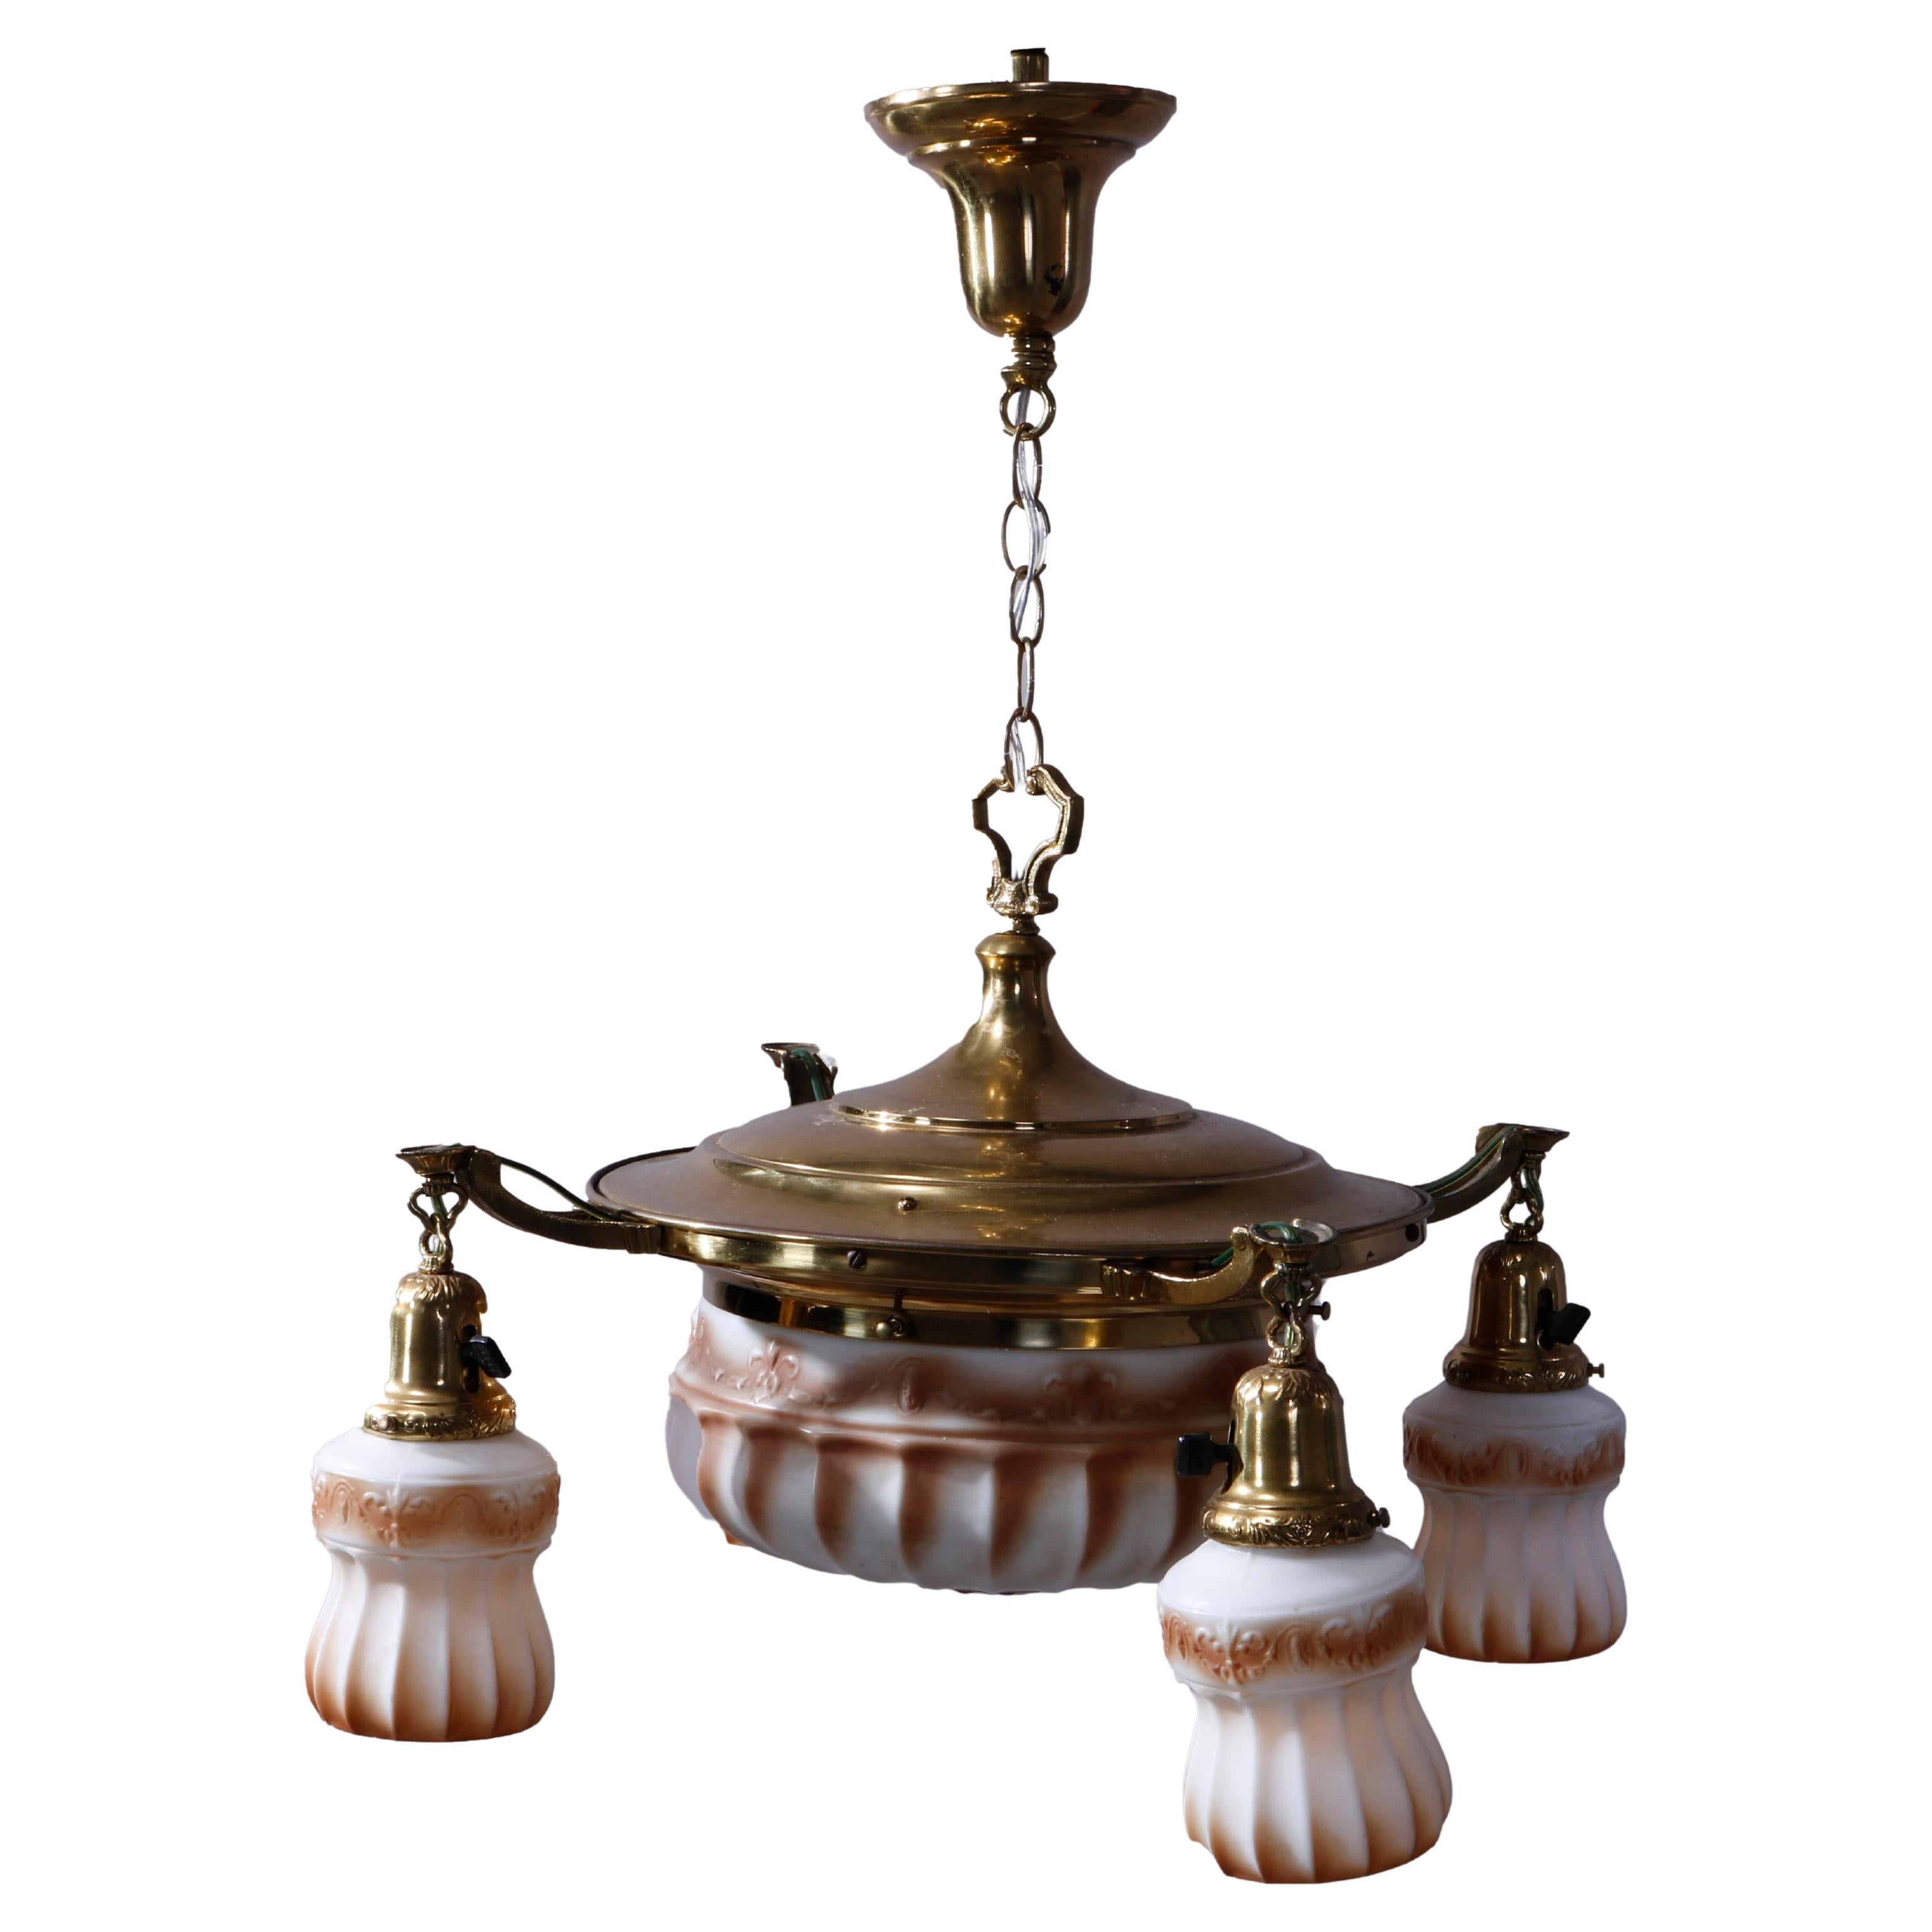 Antique Brass Pan & Drop-Light Hanging Ceiling Fixture Circa 1920